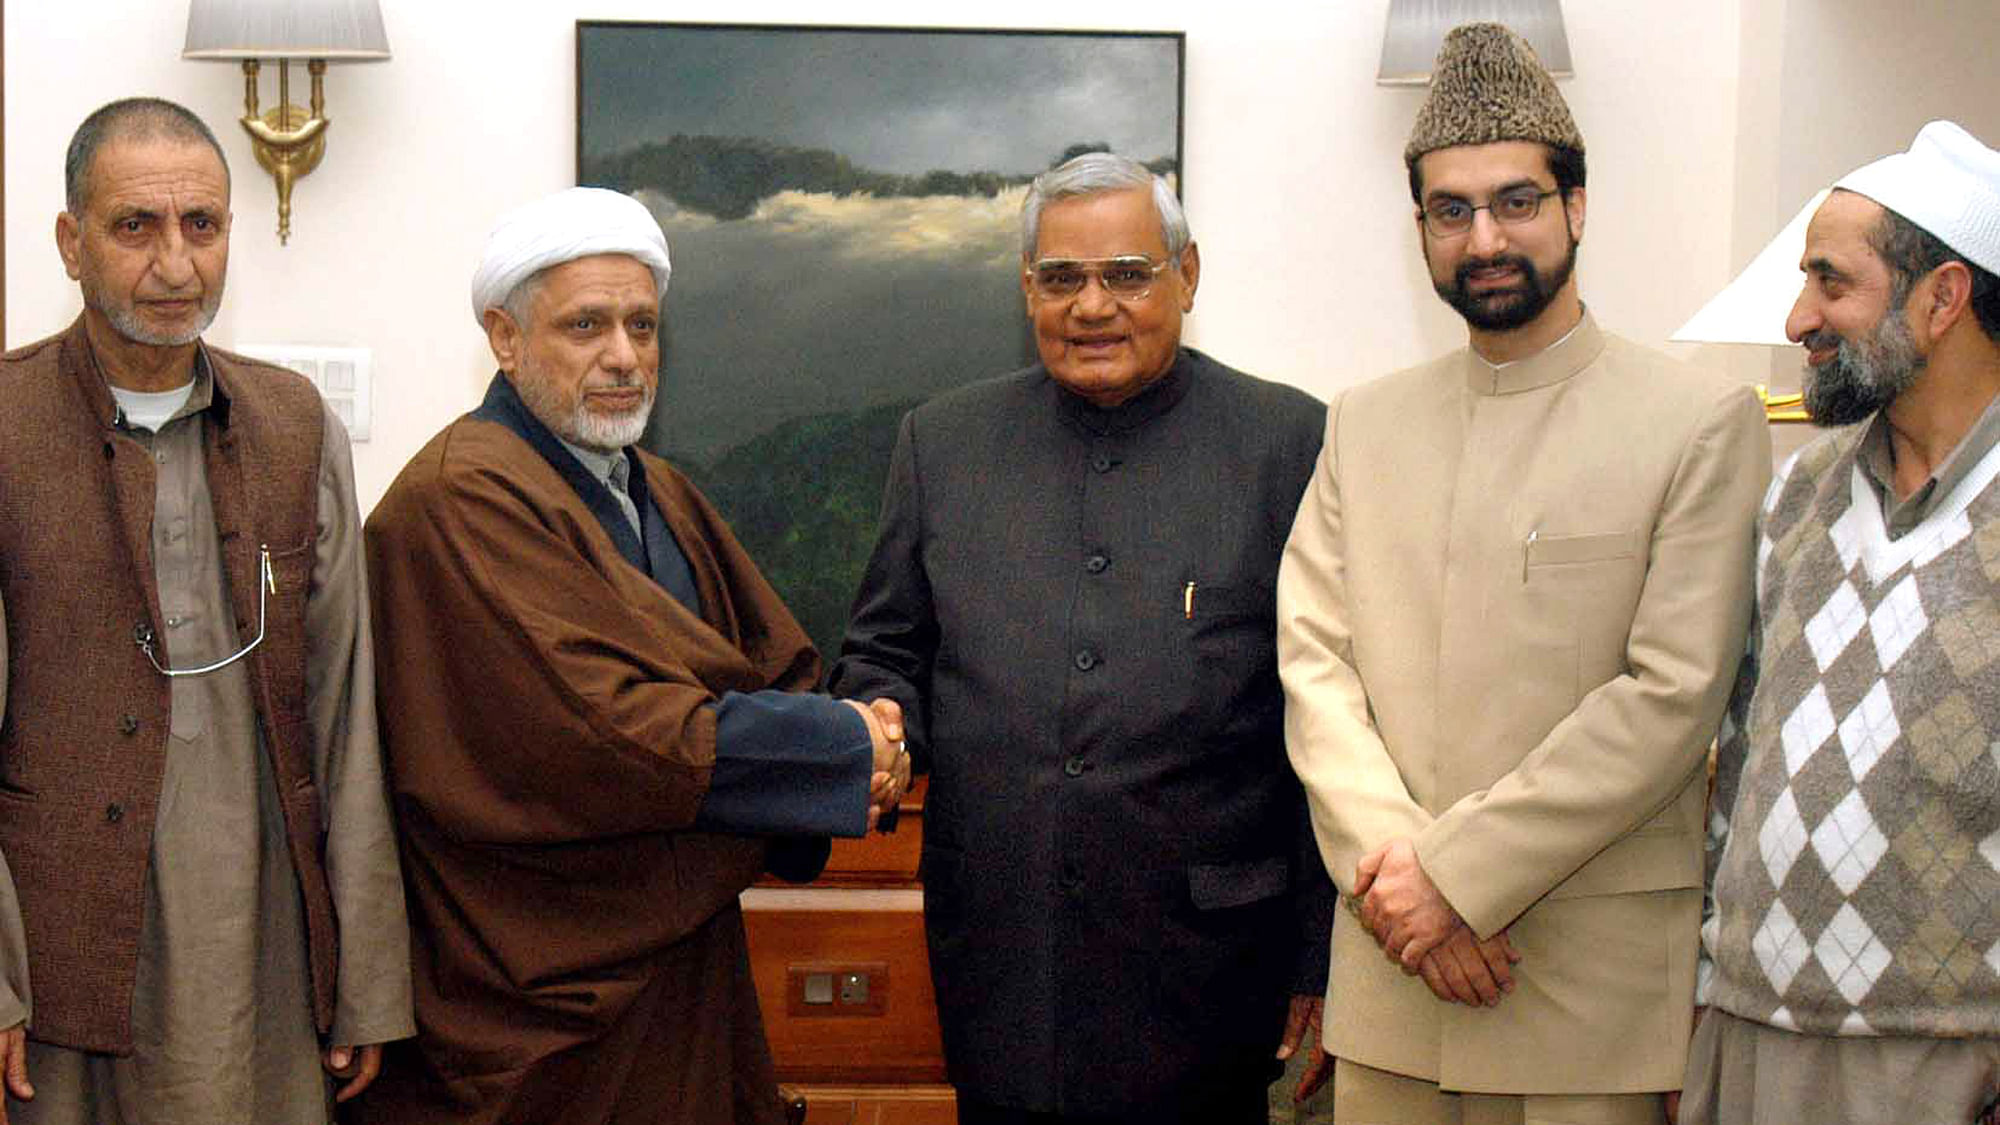 Former PM Atal Behari Vajpayee meeting with Hurriyat leaders in 2004. (Photo: Reuters)